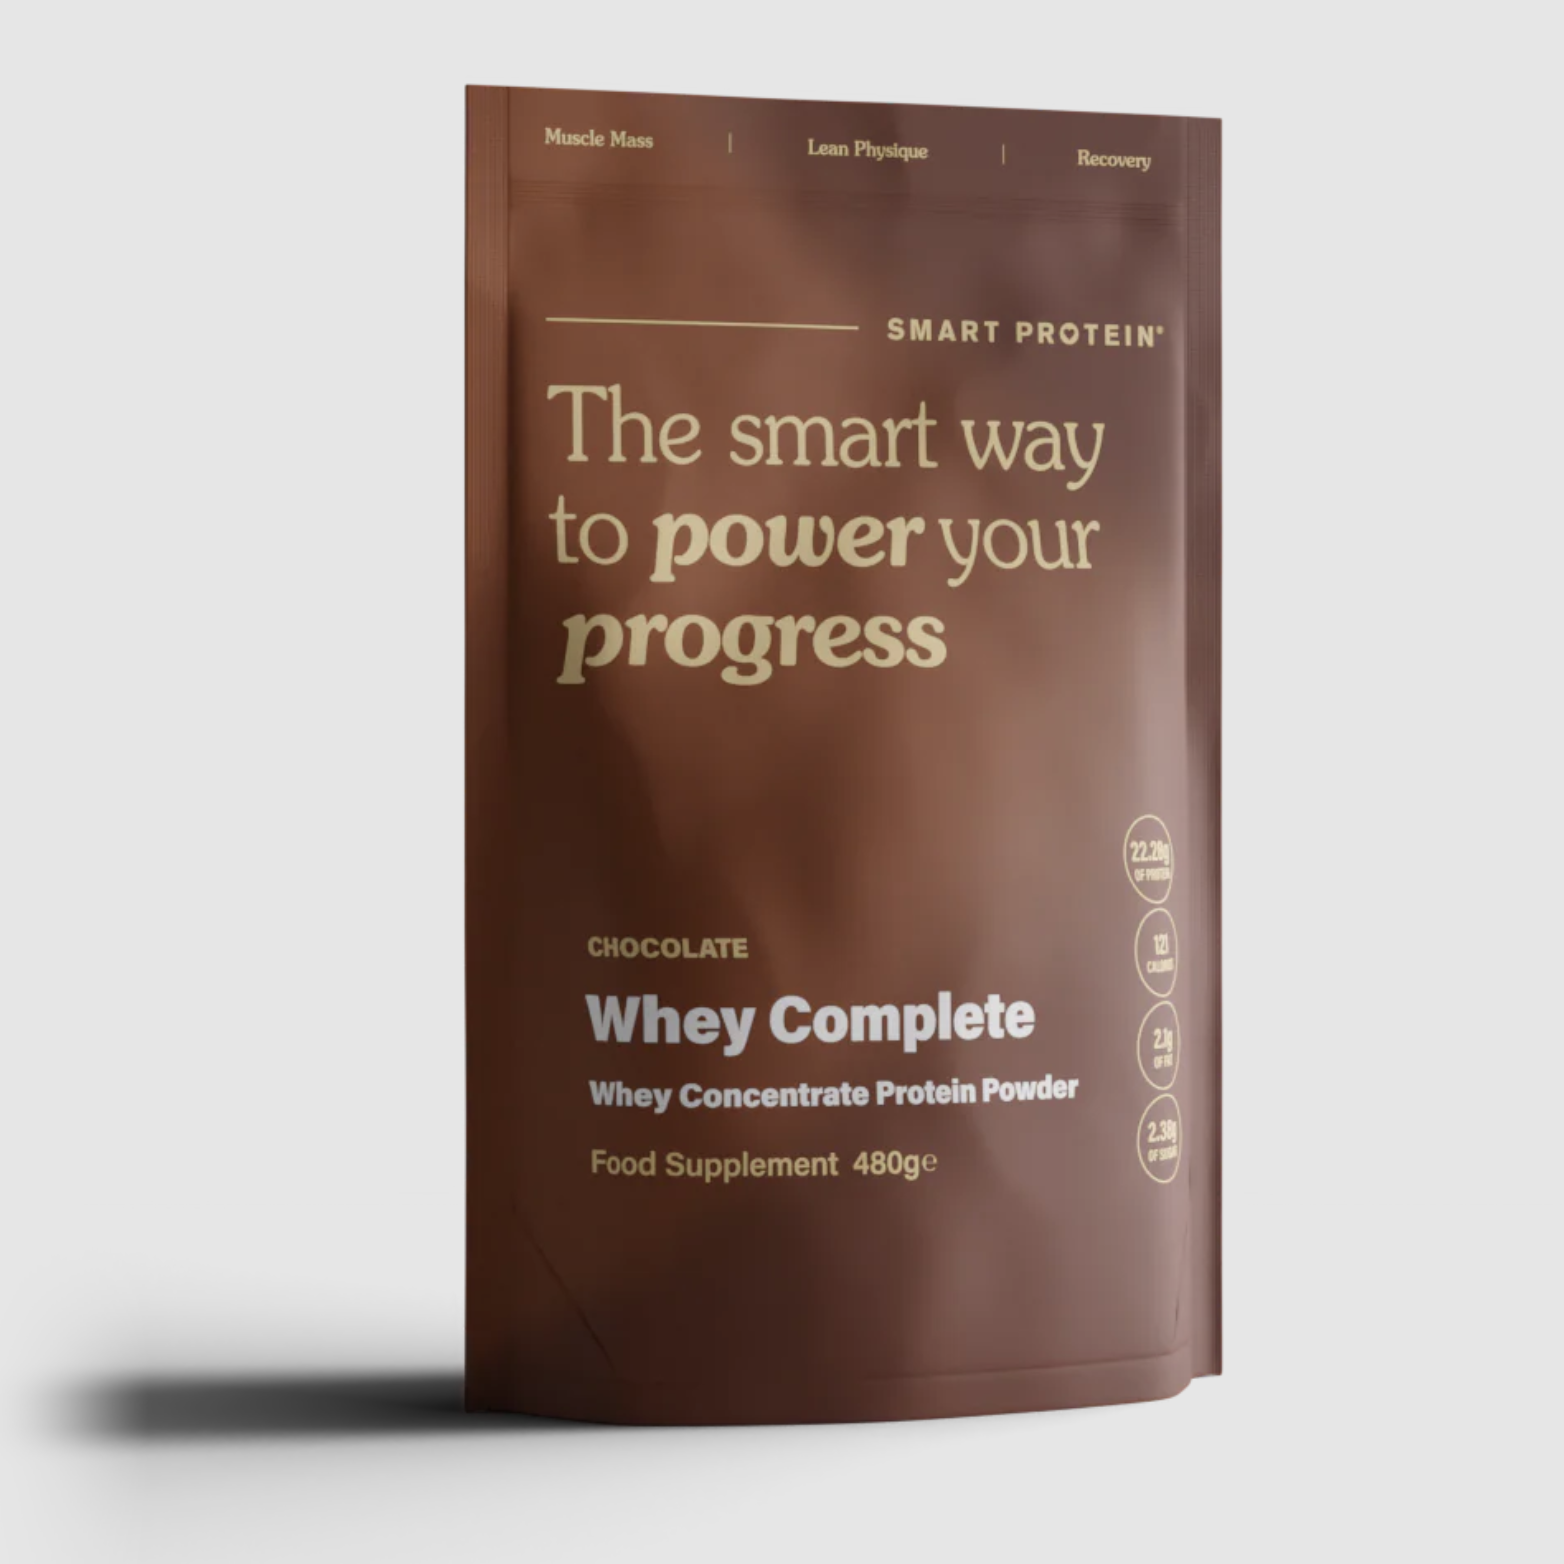 Smart Protein pure whey protein powder